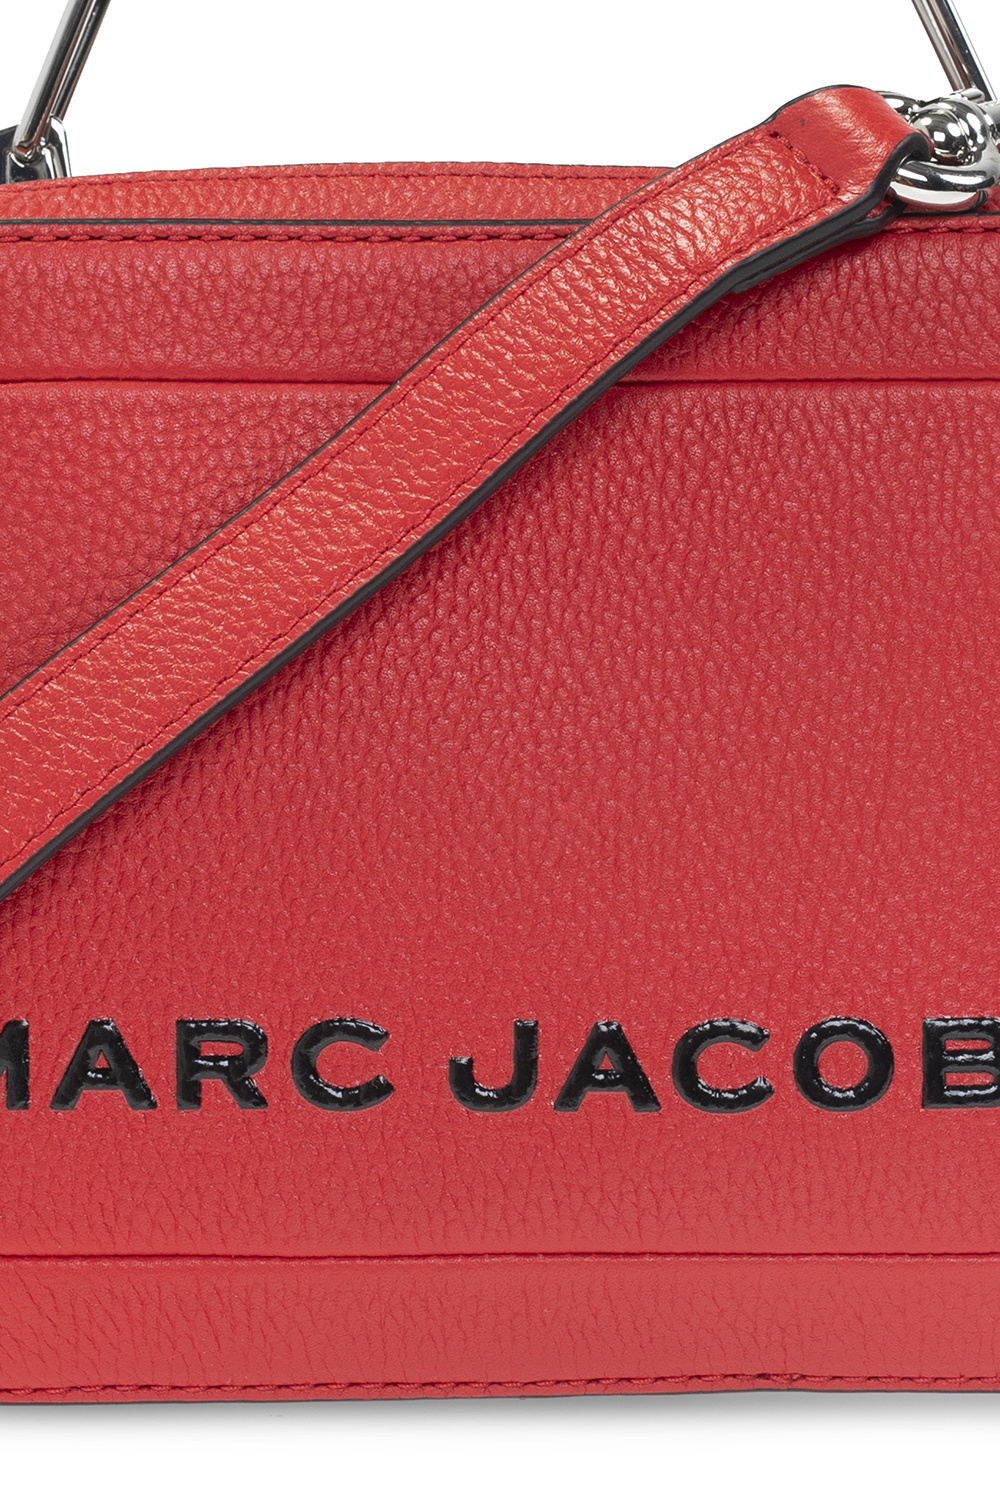 Marc Jacobs (The) ‘Box’ shoulder bag